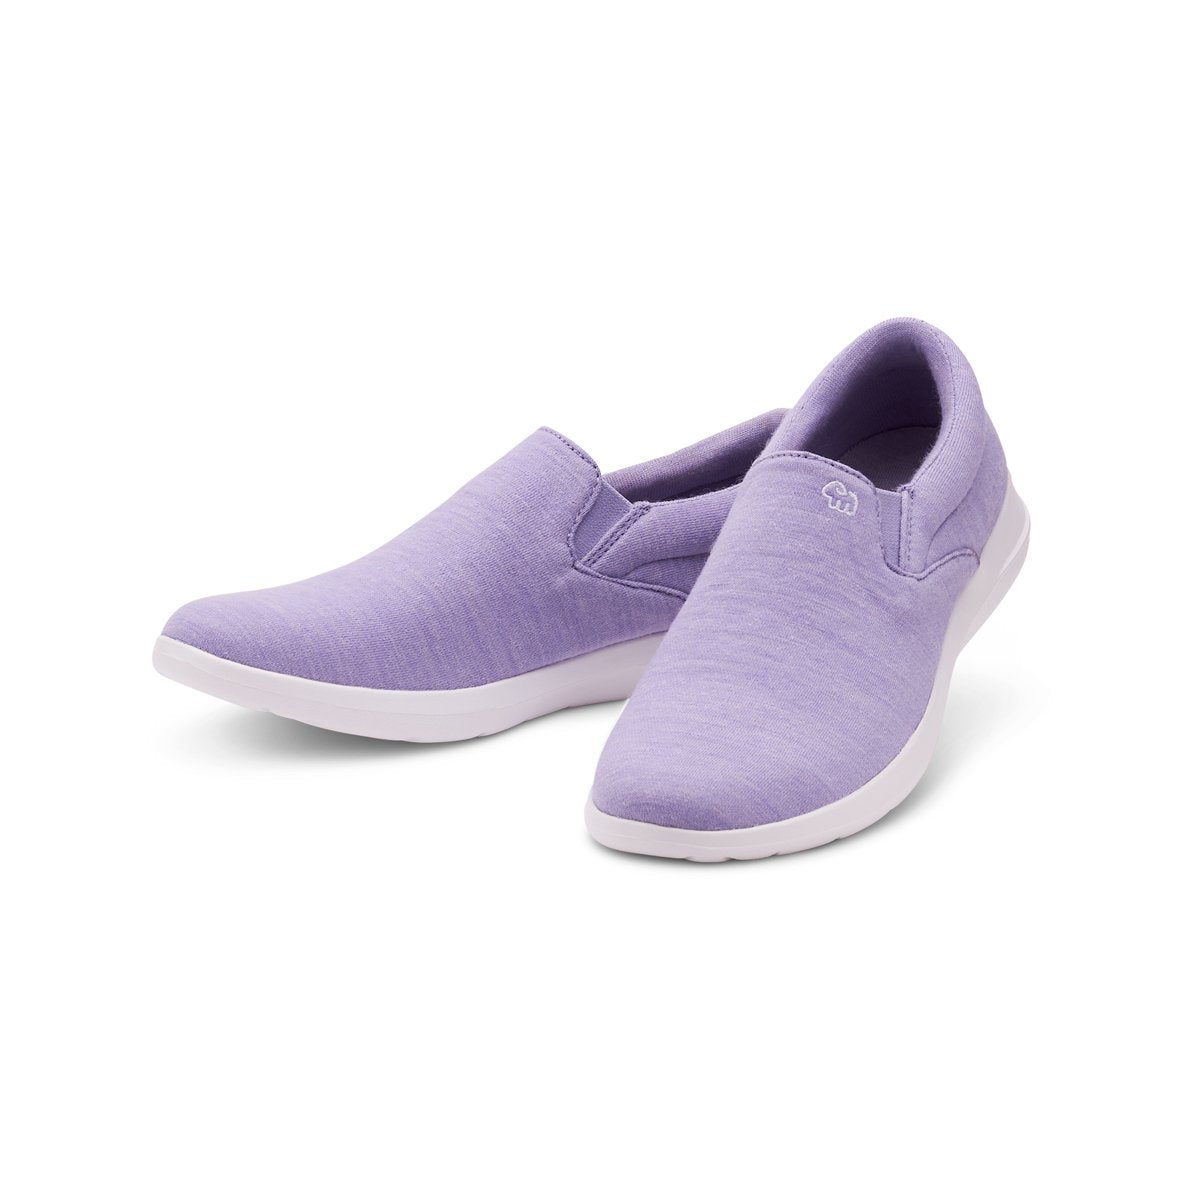 Women's Slip-Ons Lavender - Special Offer